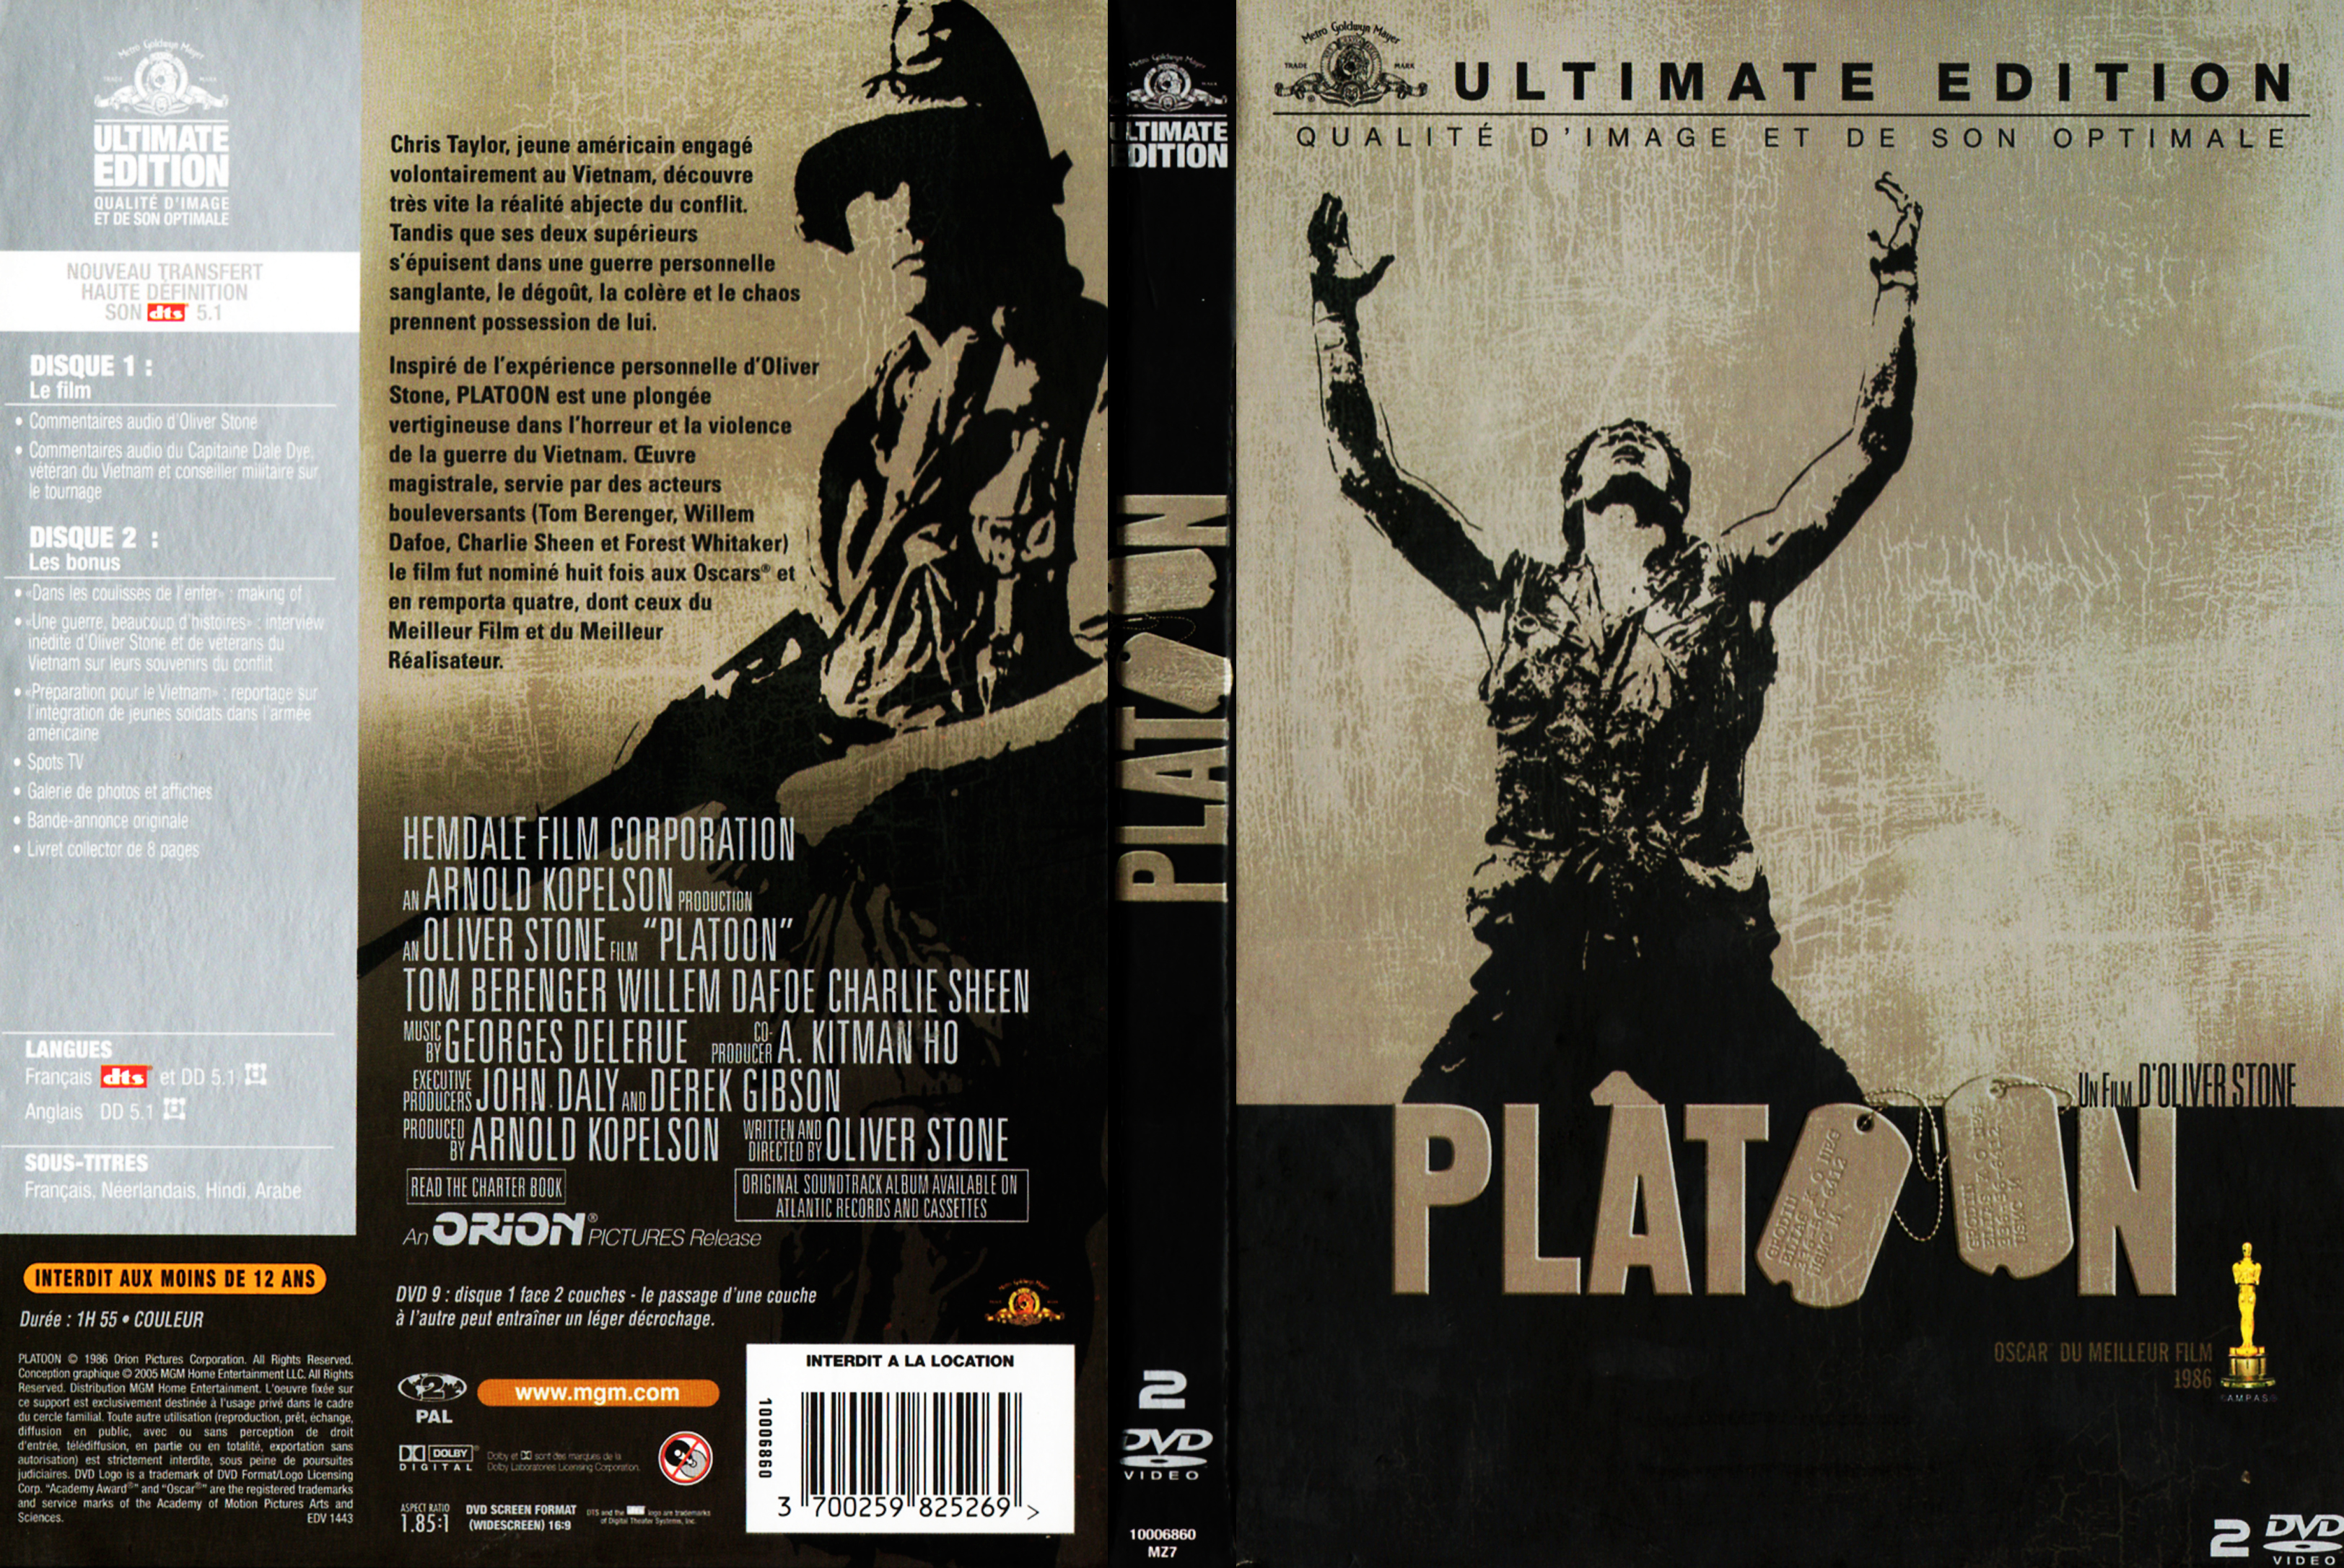 Jaquette DVD Platoon v4